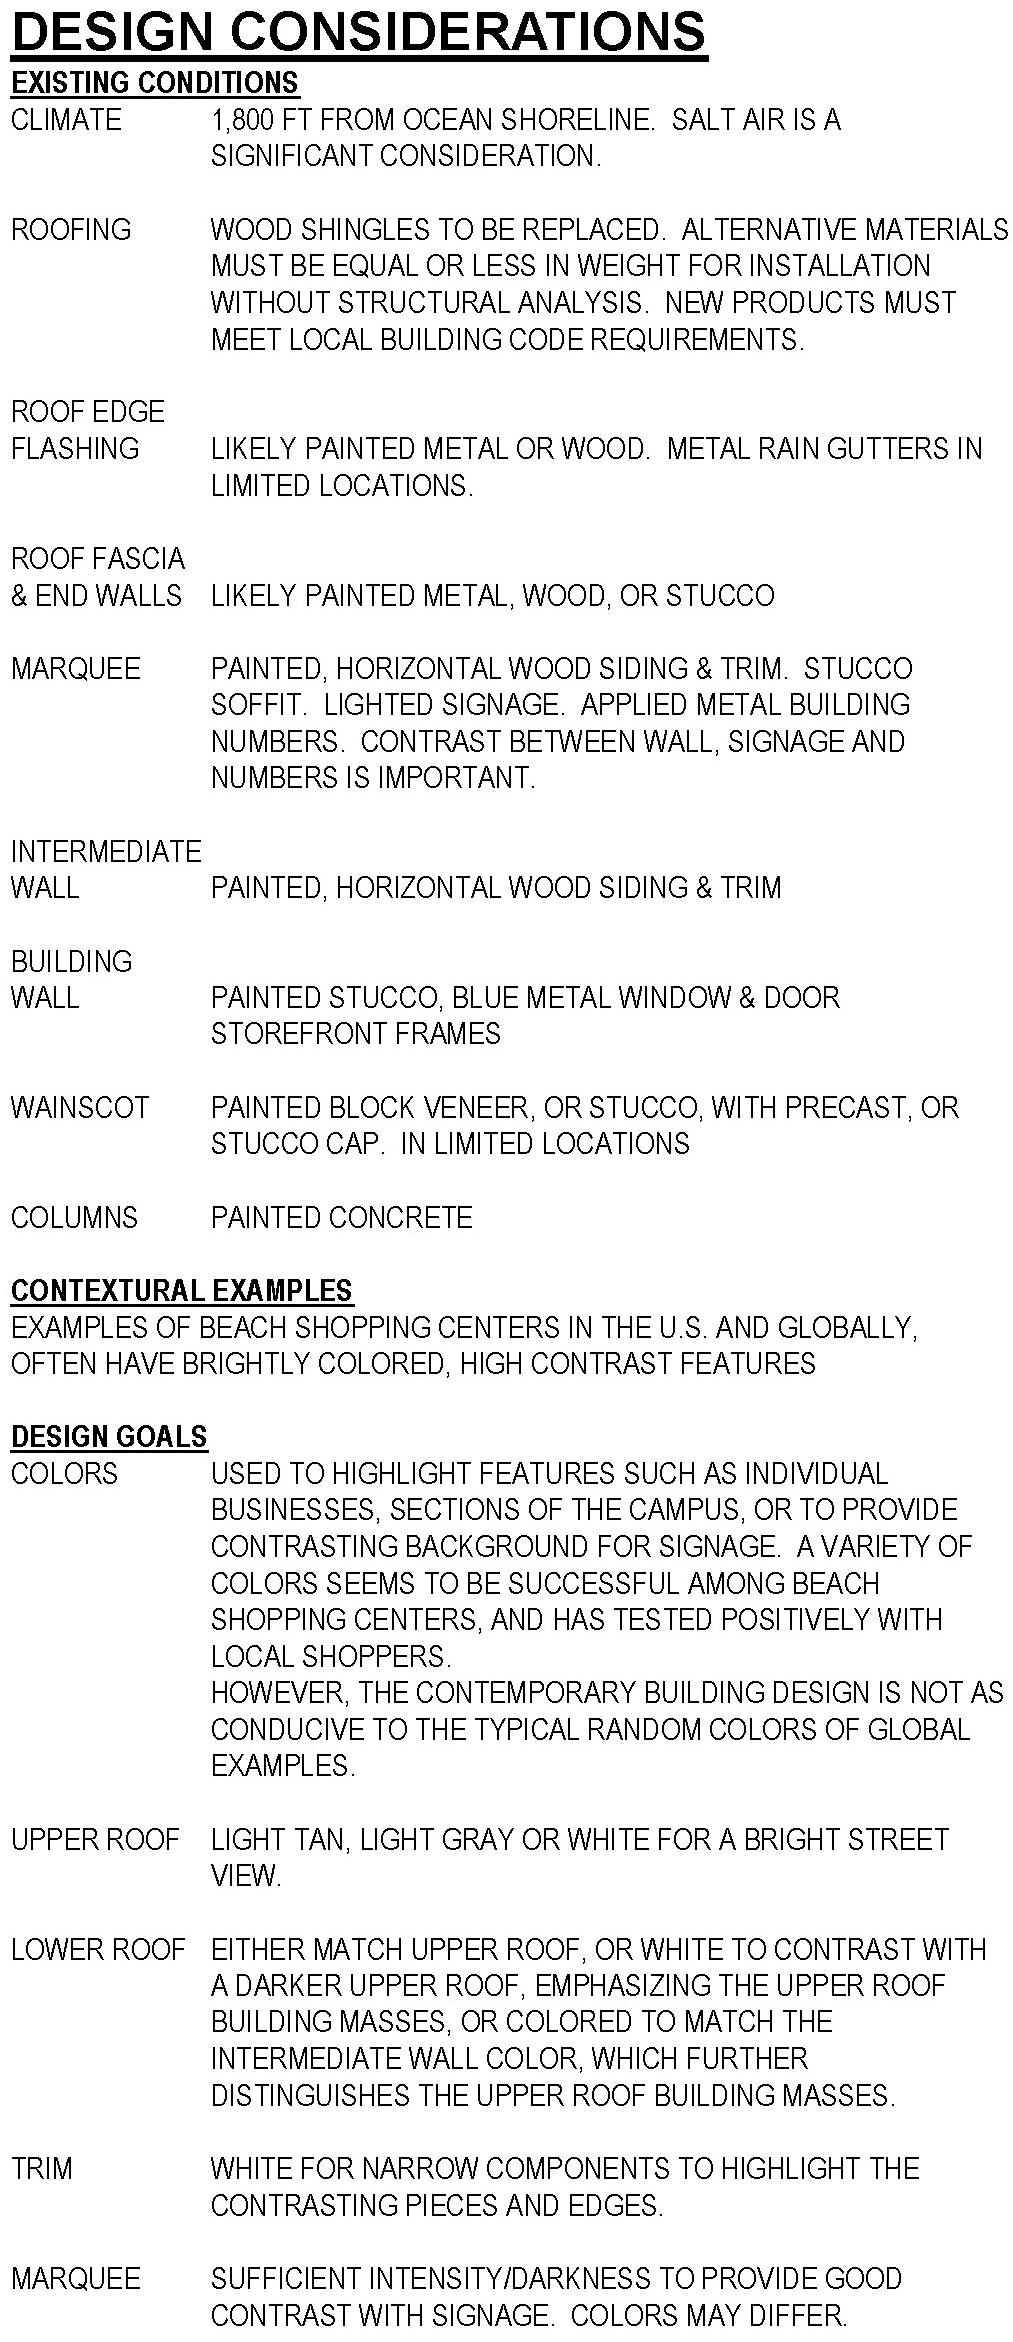 Beachport Center Facade Study, ENR architects, Granbury, TX 76049 - Design Outline